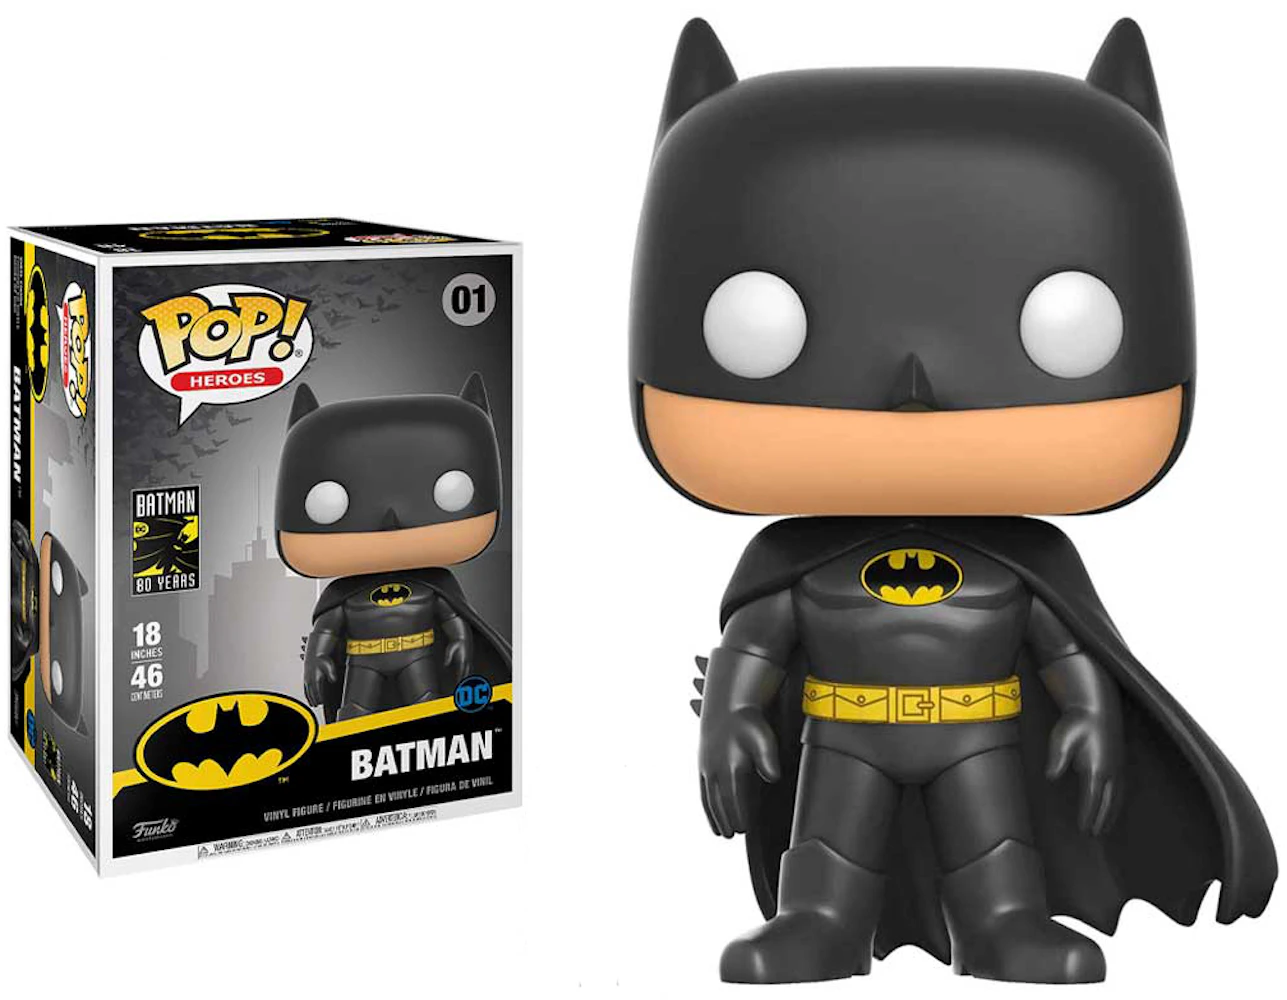 https://images.stockx.com/images/Funko-Pop-Heroes-Batman-18-Inch-Figure-01.jpg?fit=fill&bg=FFFFFF&w=700&h=500&fm=webp&auto=compress&q=90&dpr=2&trim=color&updated_at=1607122904